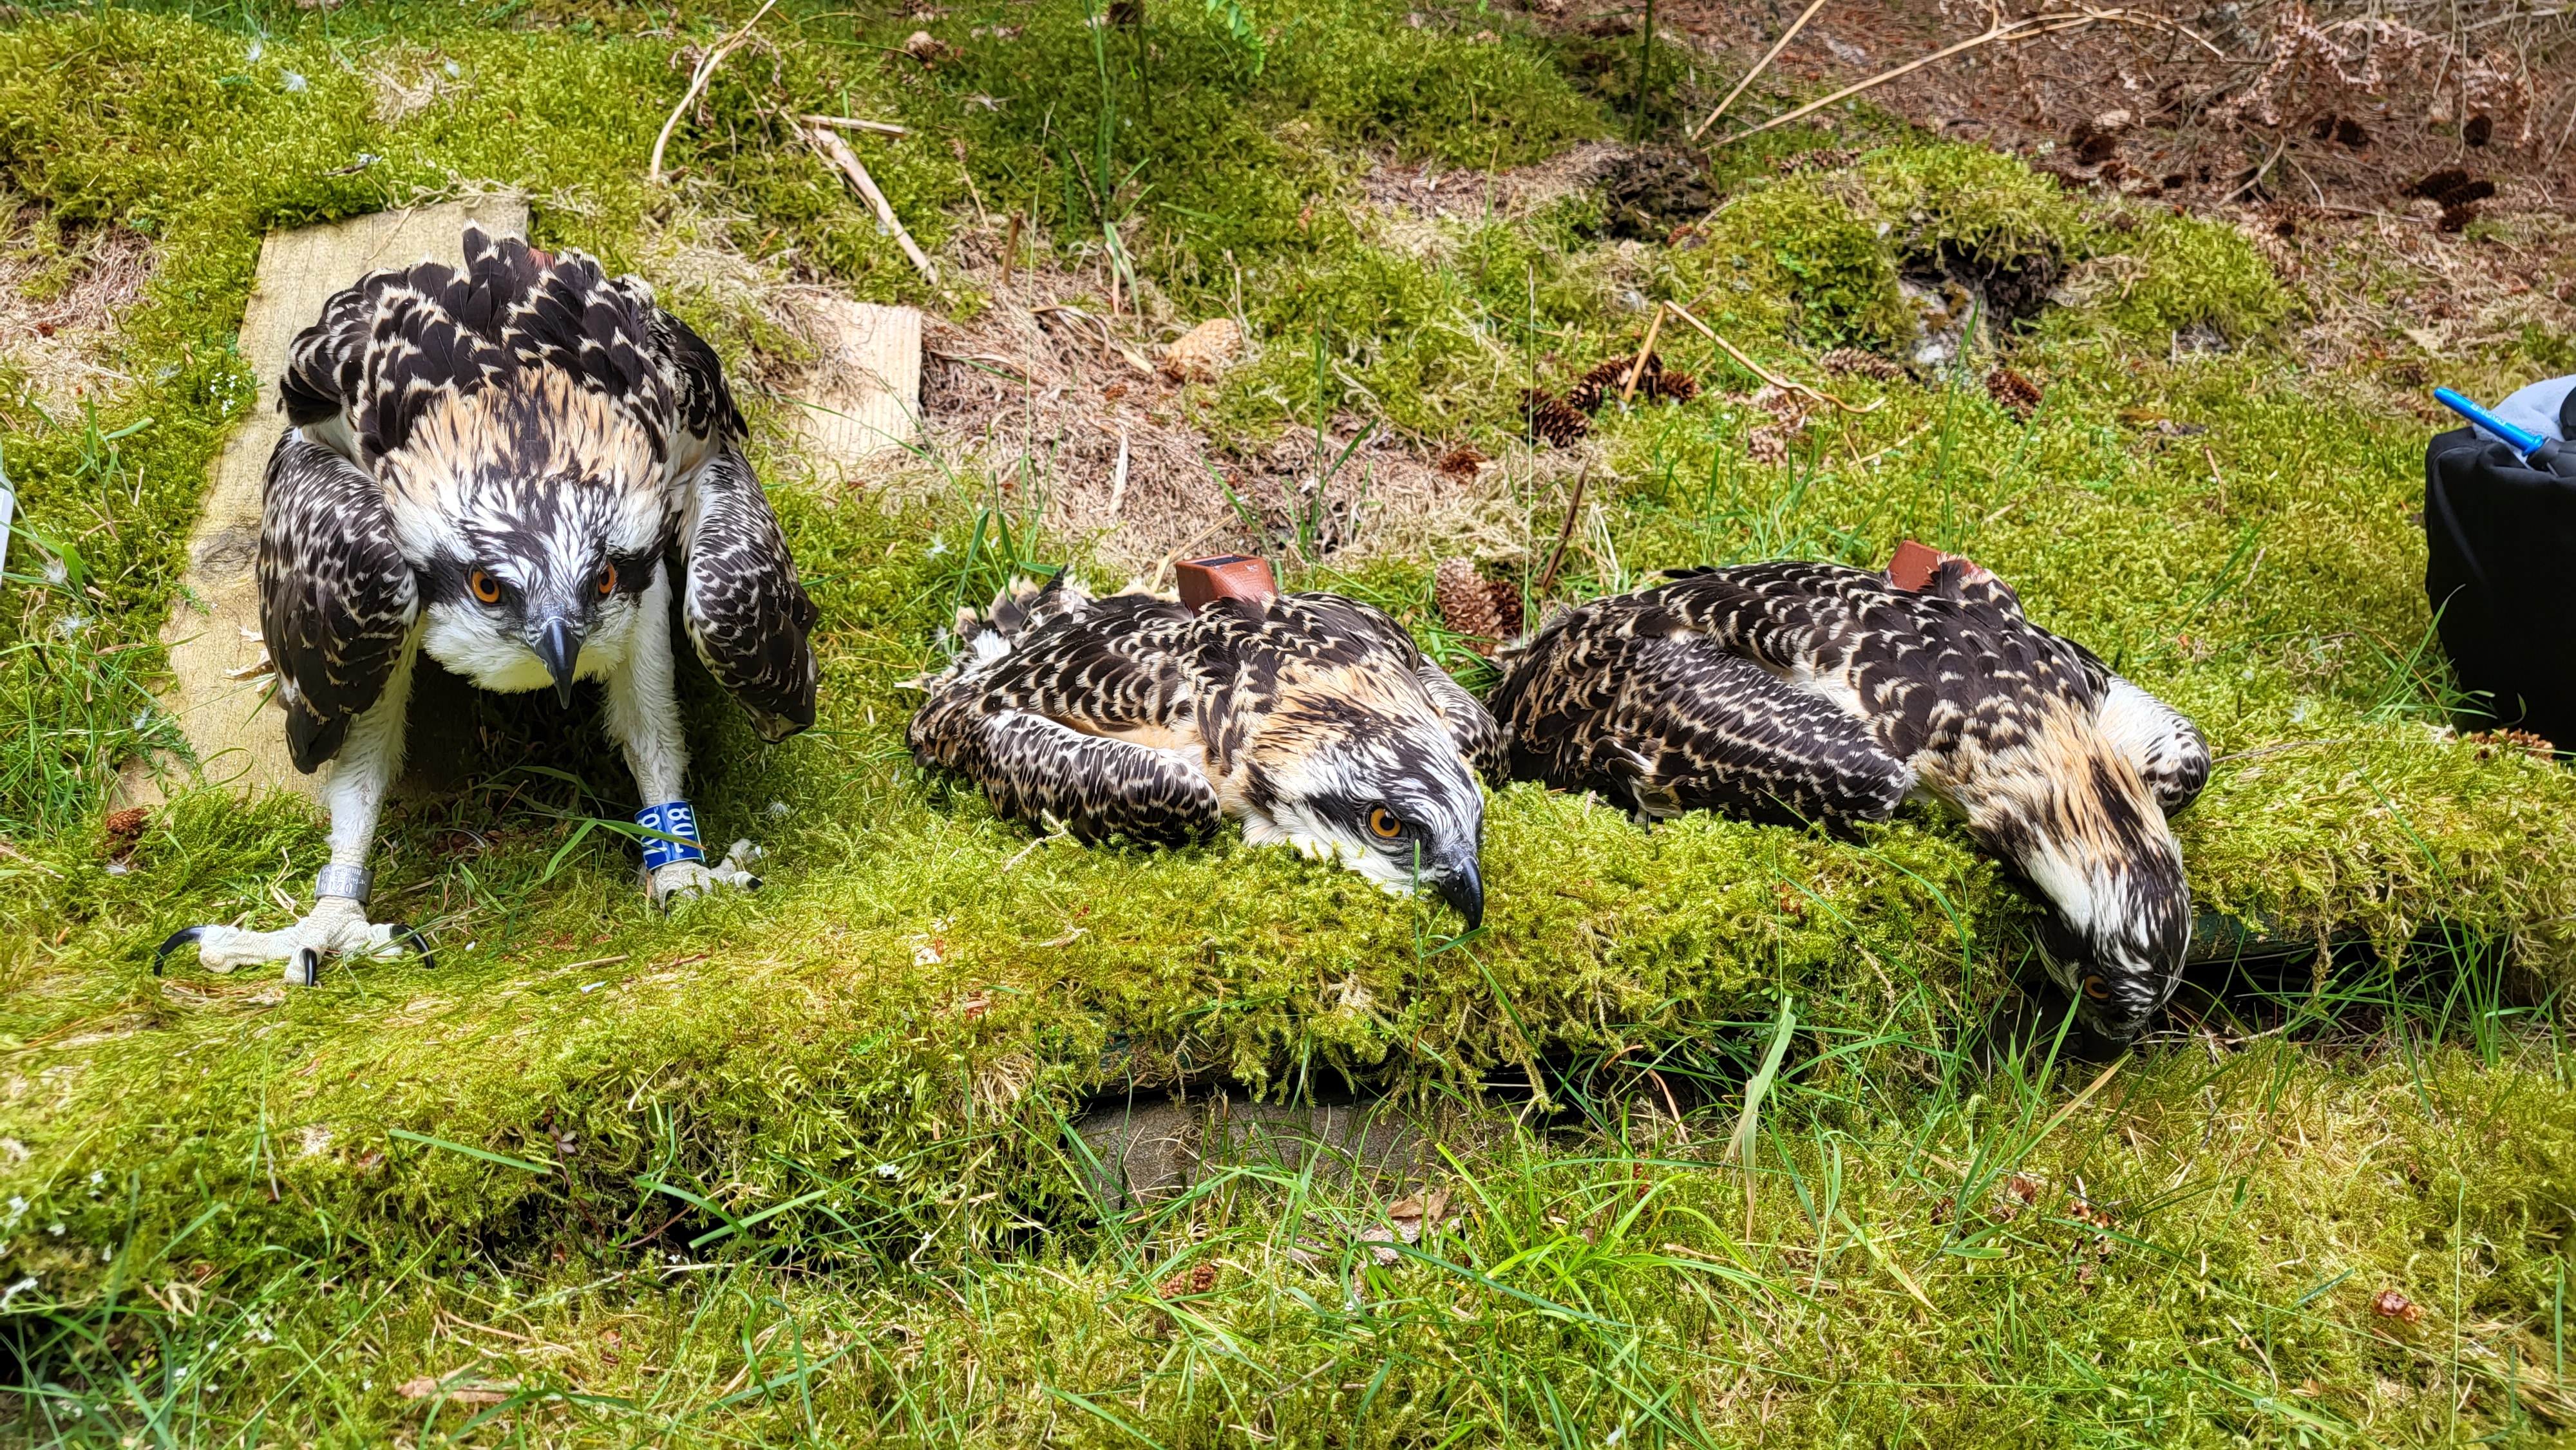 Three osprey chicks with tags